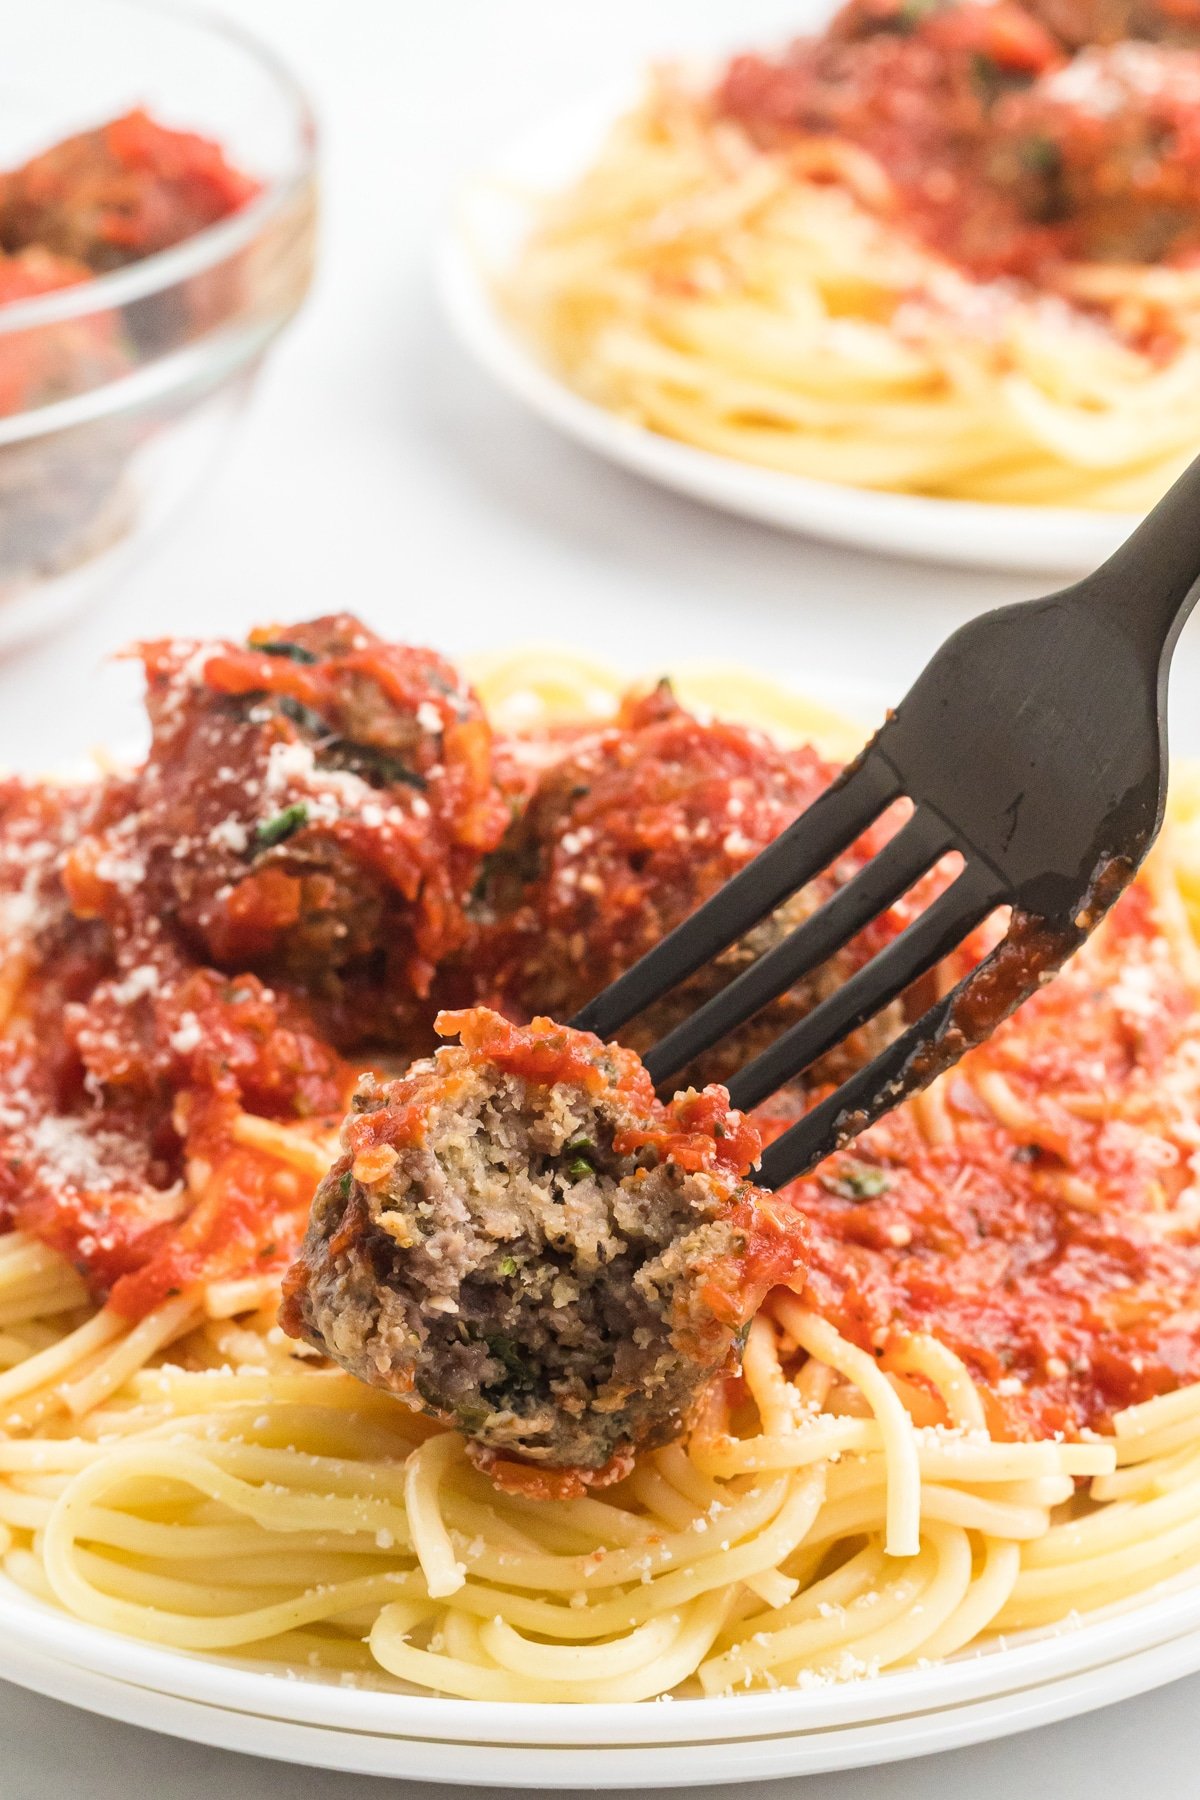 A meatball on a fork over a plate of spaghetti